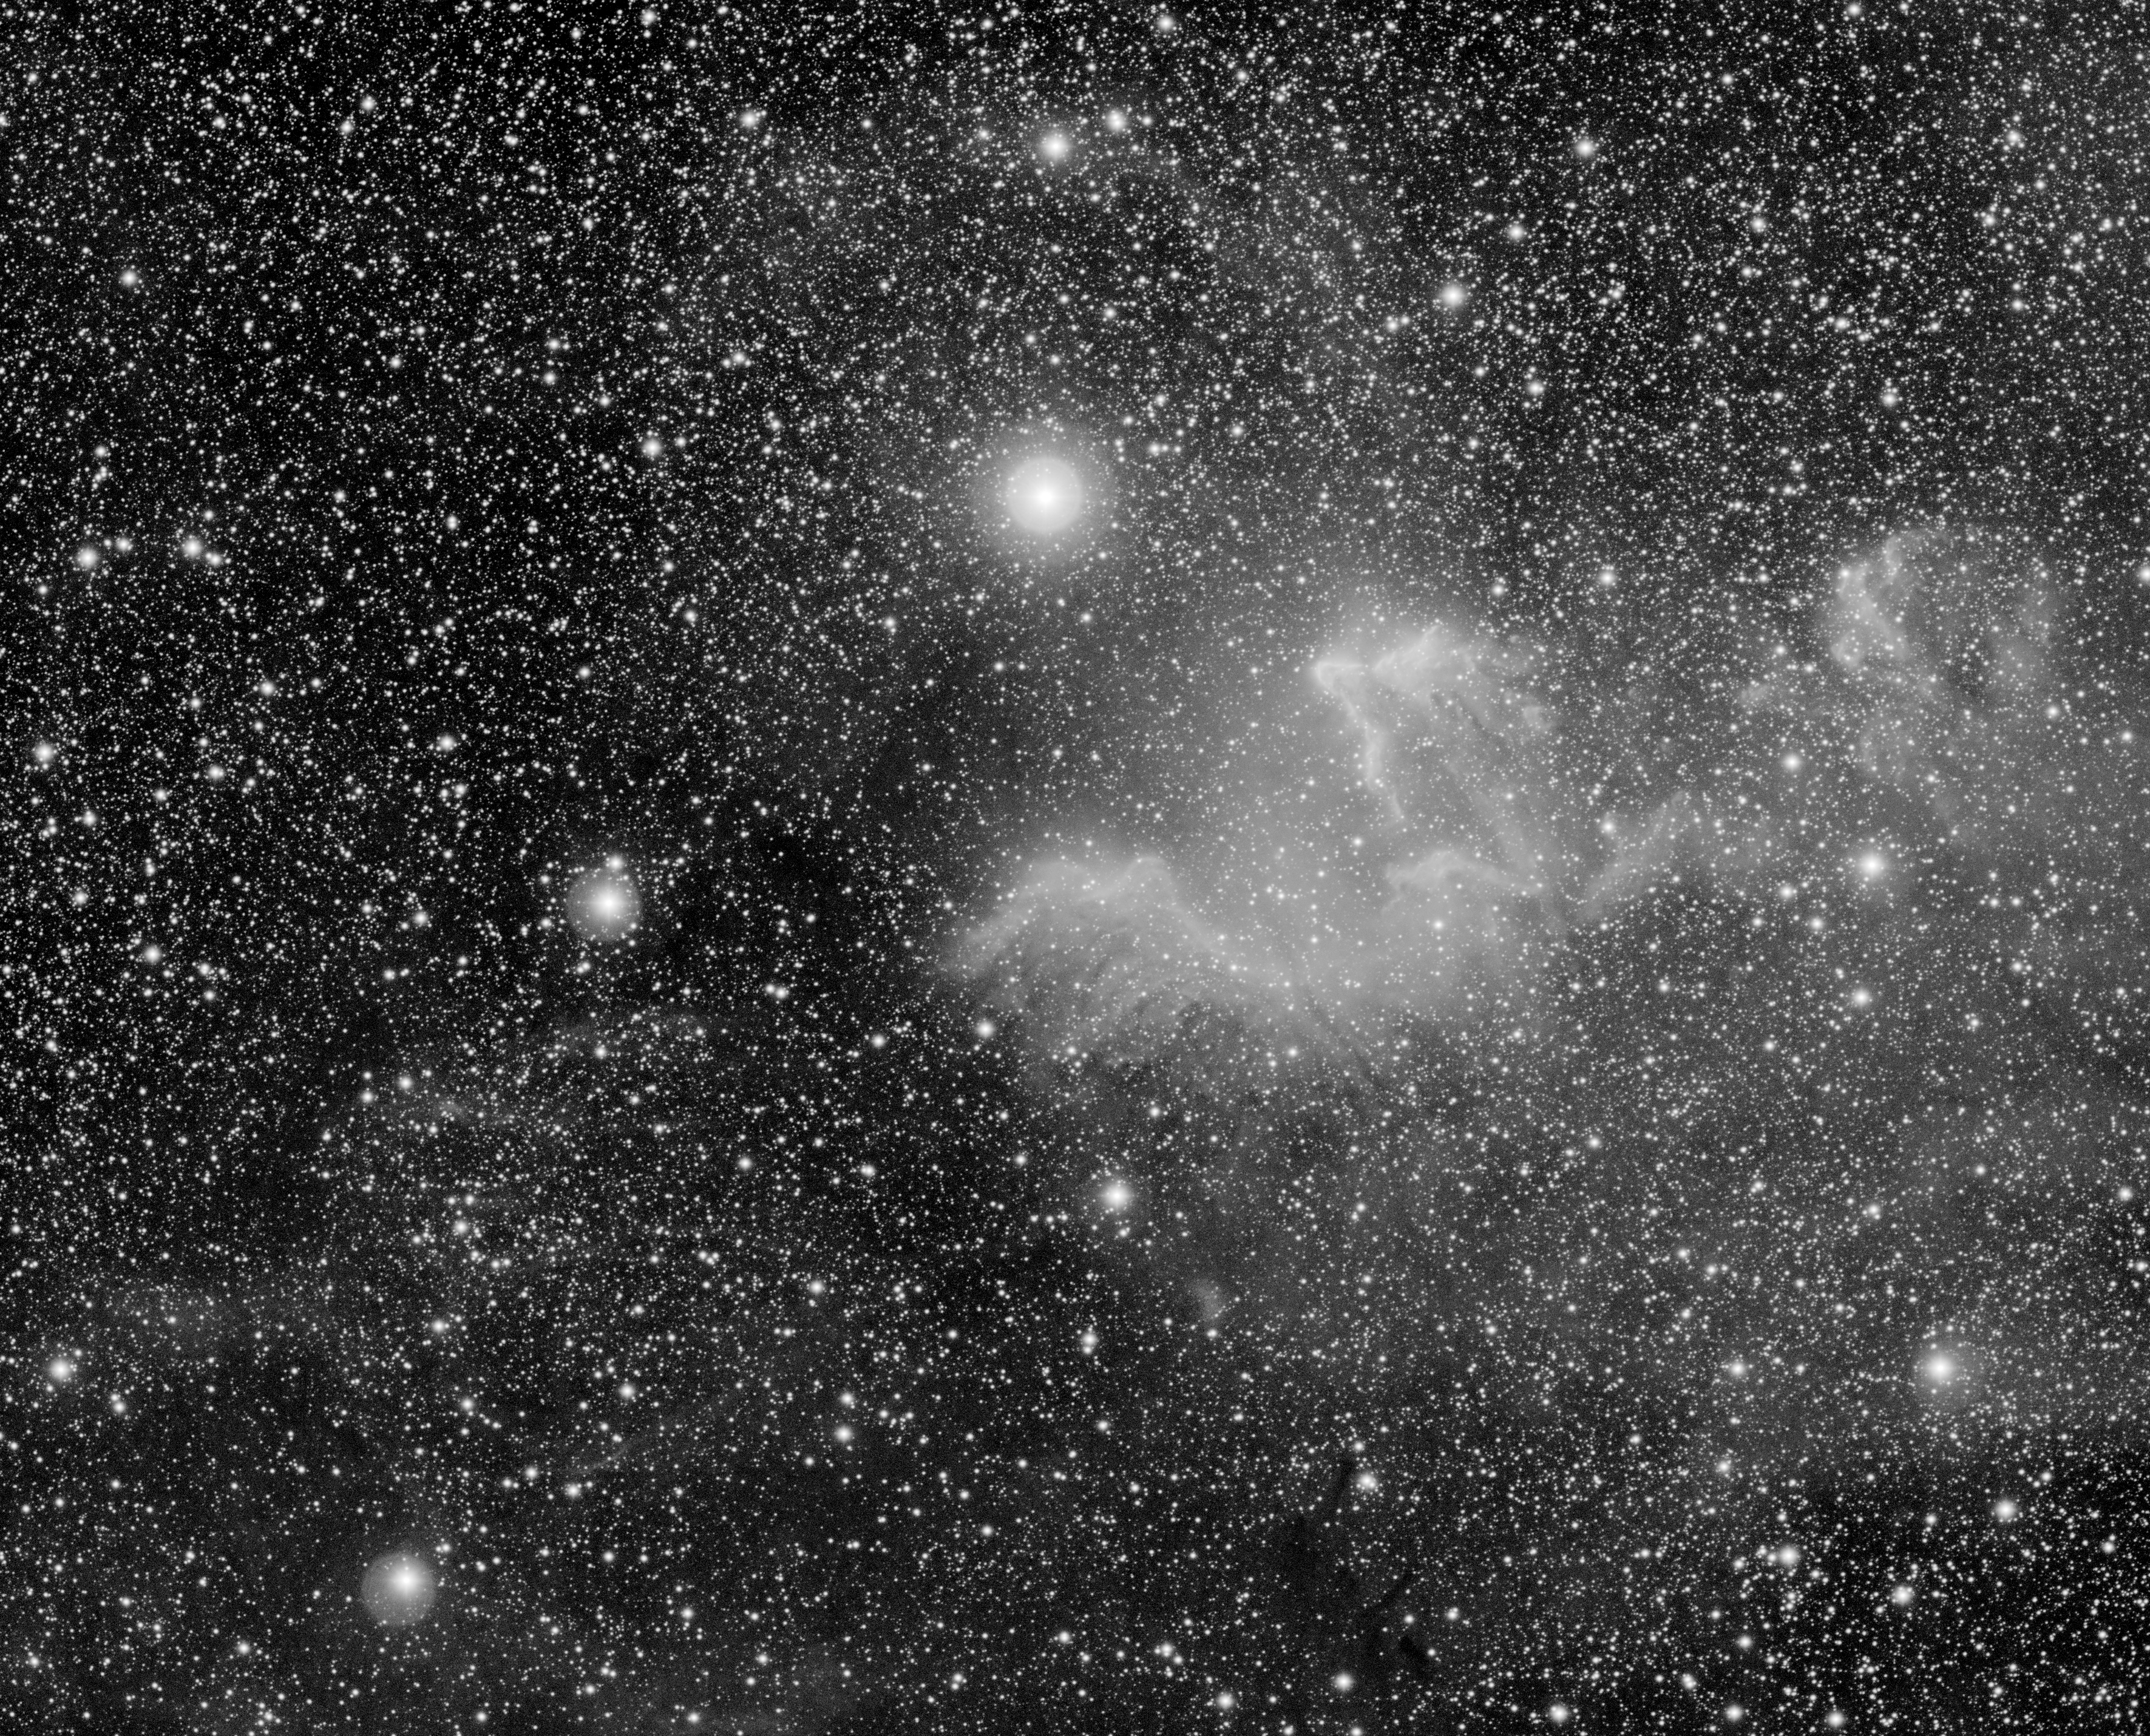 The gamma cas nebula photo